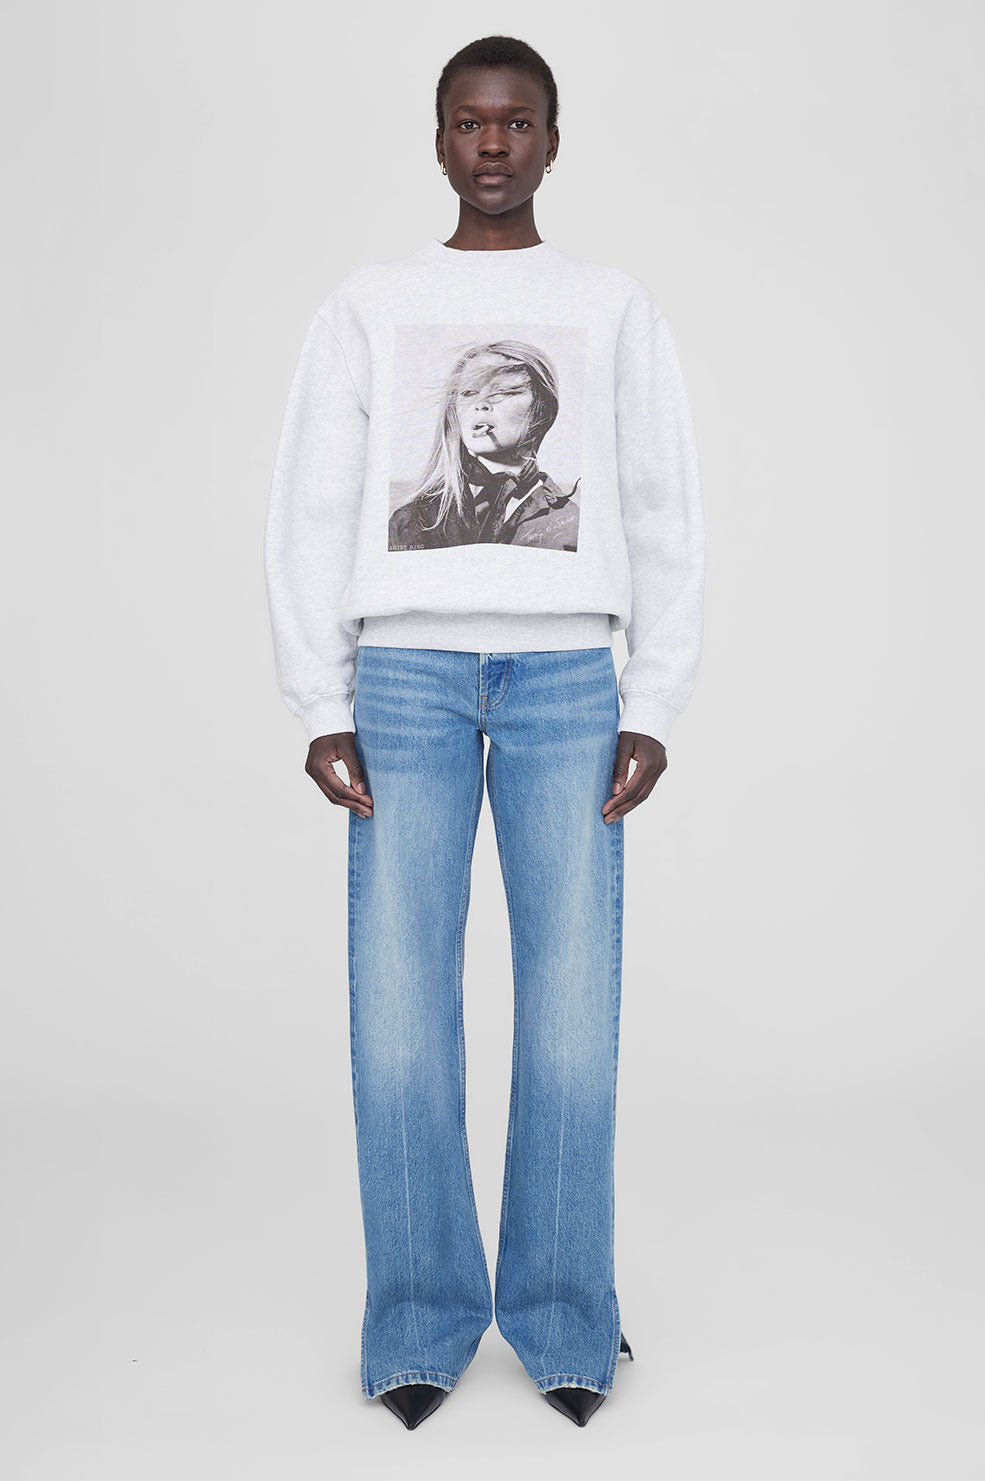 Anine Bing Ramona Monogram Sweatshirt (Size XS), Women's Fashion, Coats,  Jackets and Outerwear on Carousell